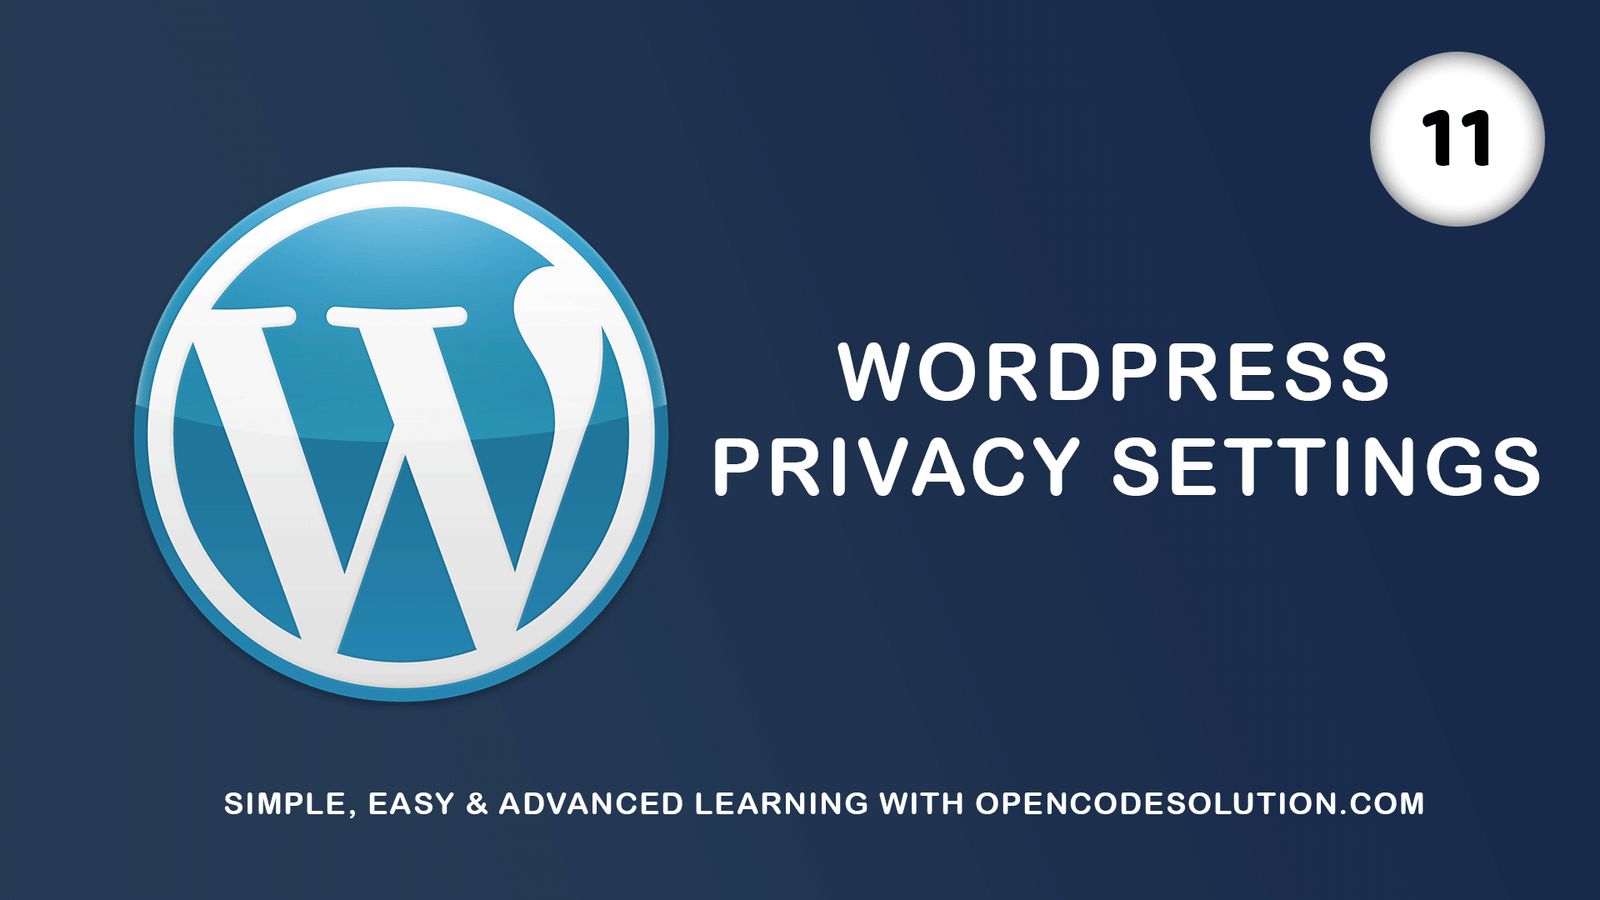 WordPress Privacy Settings #11